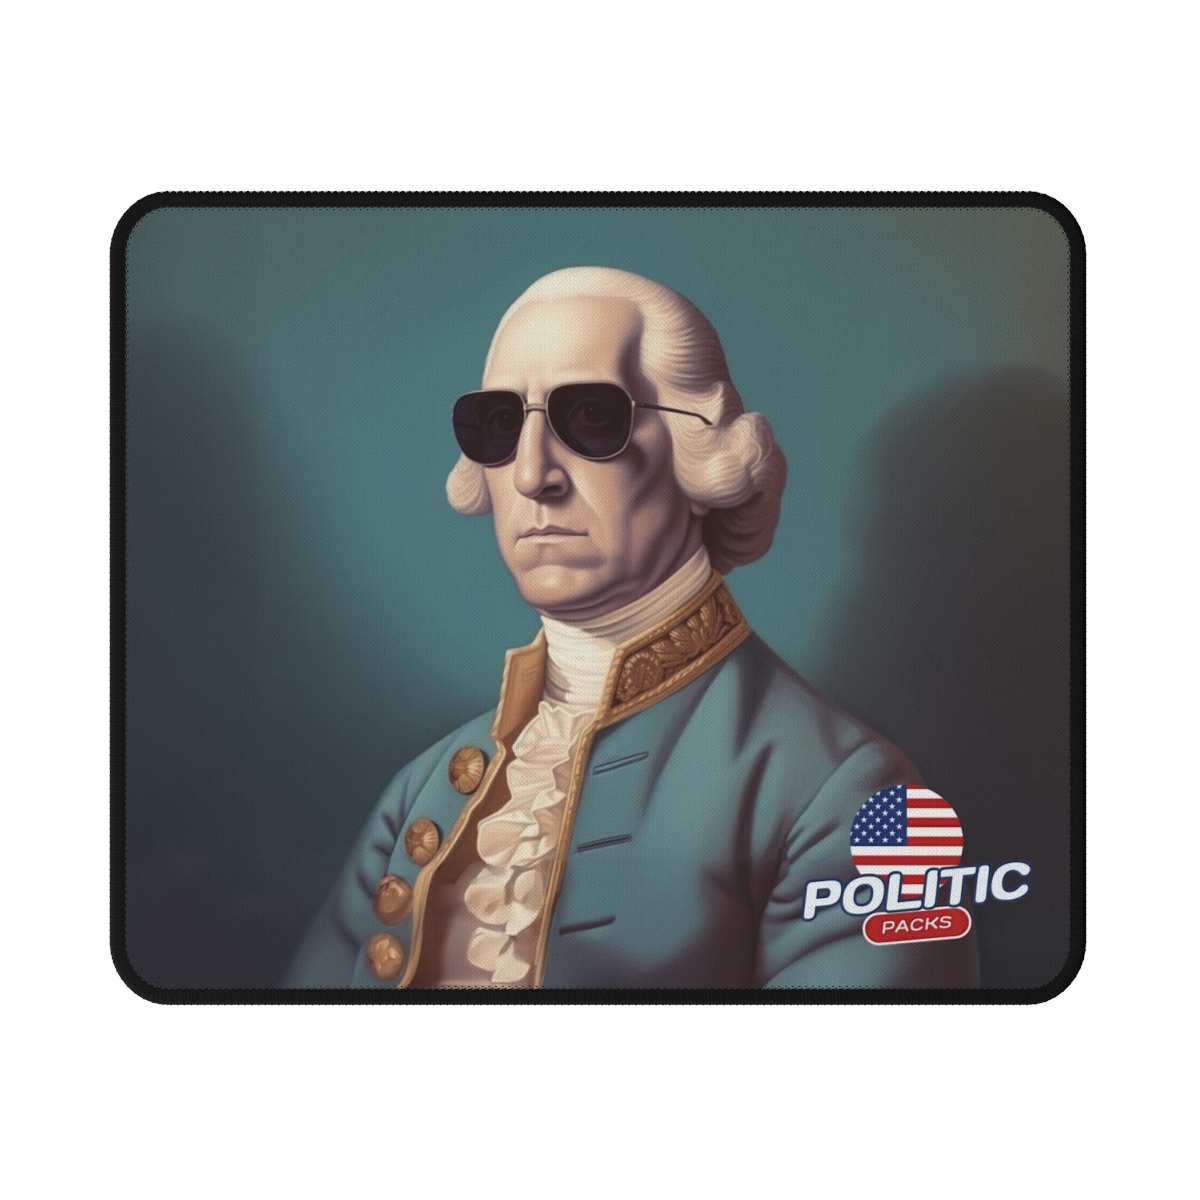 George Washington Legacy Mouse Pad – Politic Packs Edition